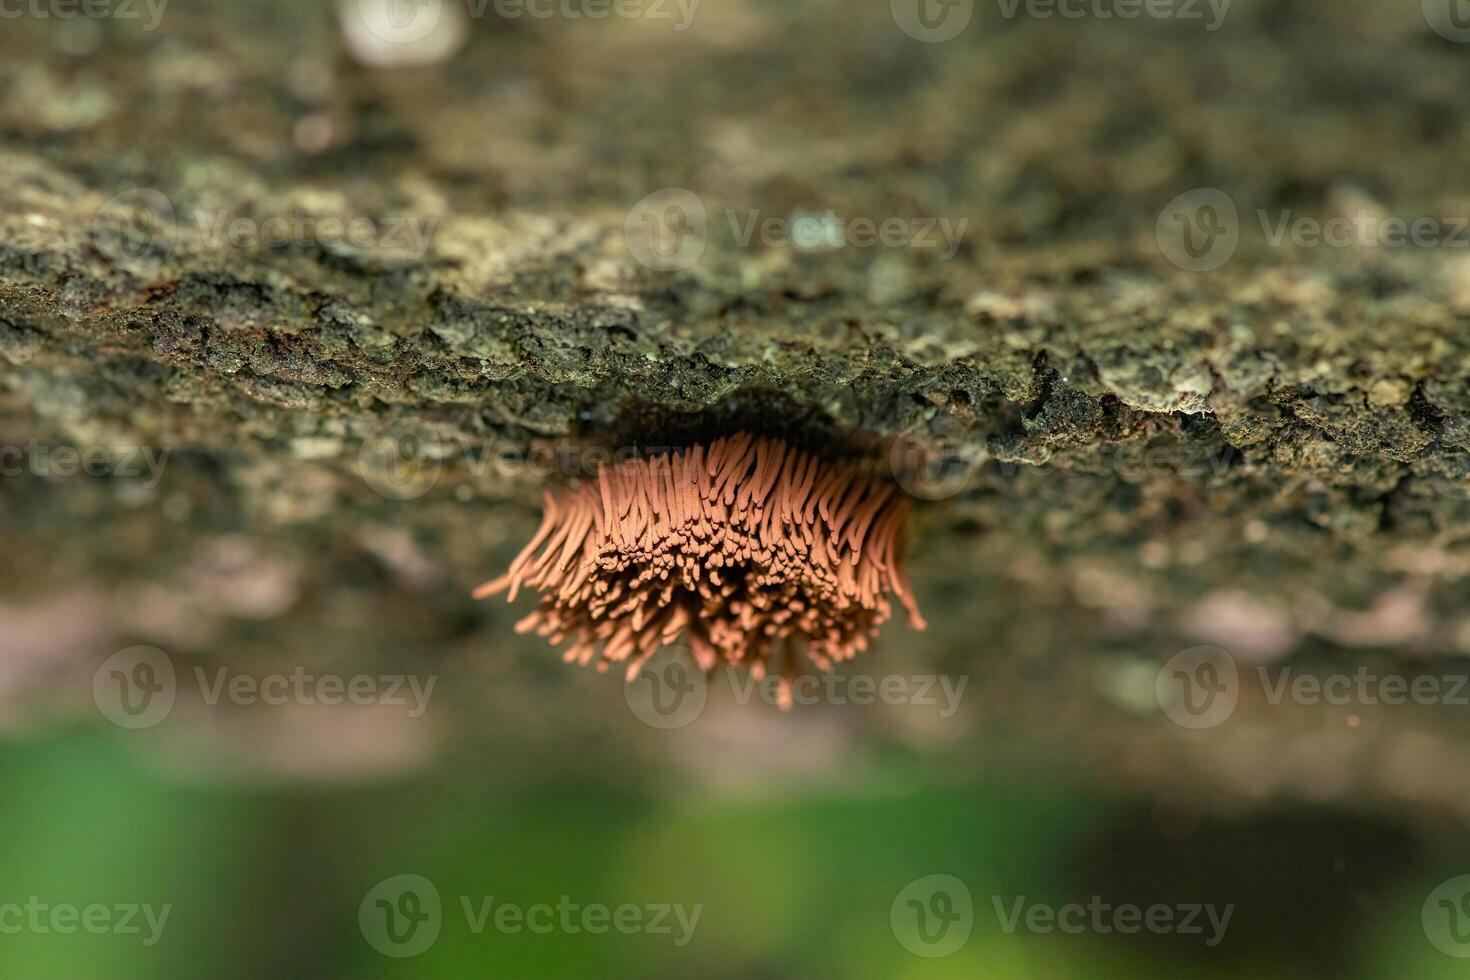 Chocolate tube slime mould growing on a fallen log. Stemonitis axifera. Isparta, Turkey photo